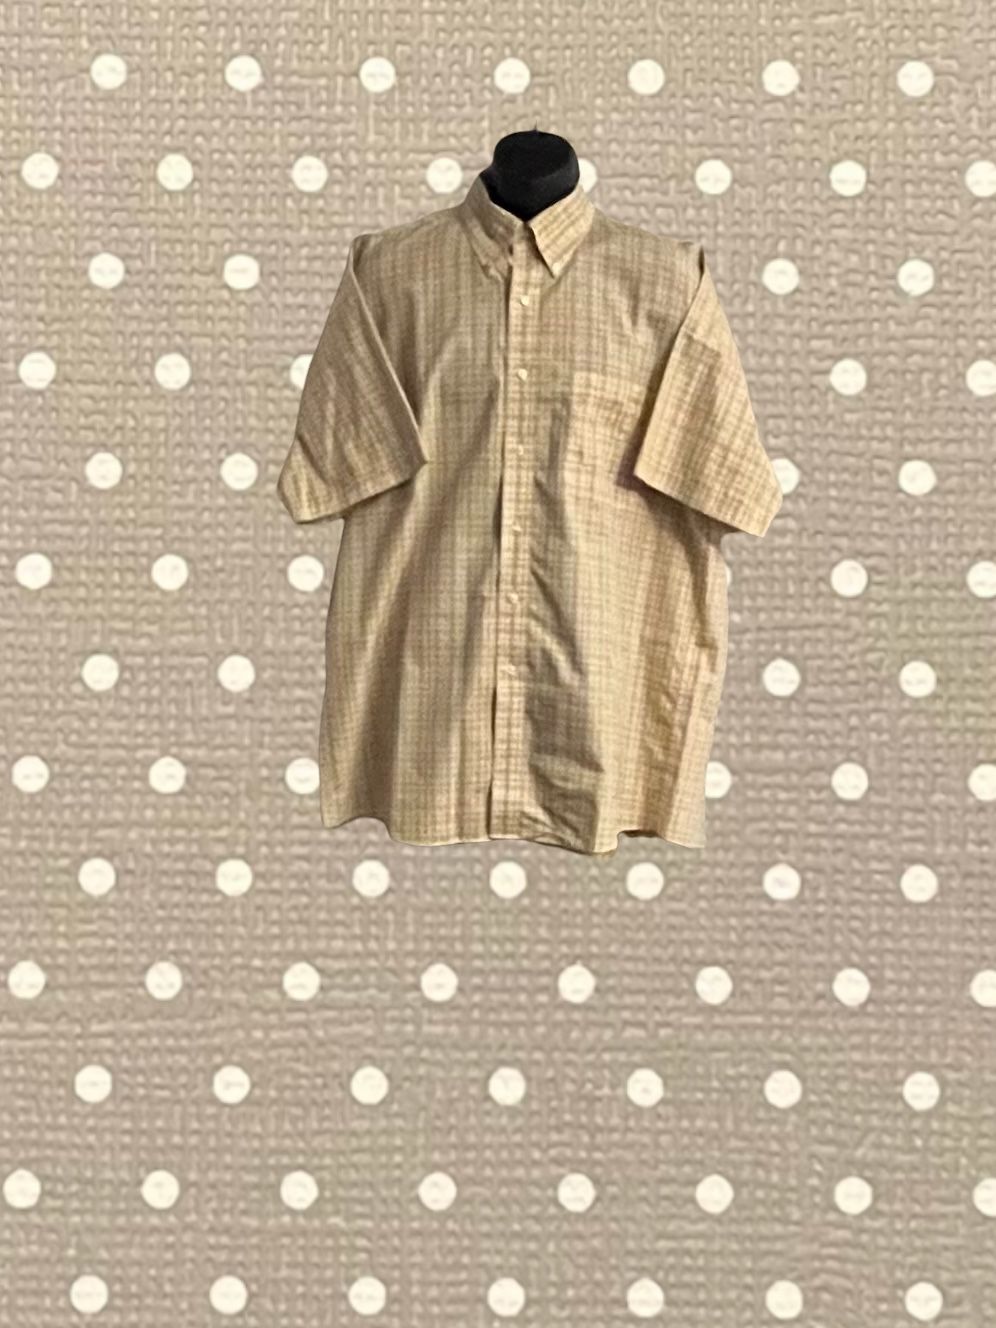 Jos. A. Bank plaid short sleeve button down shirt. Size L stays cool Tan, beige & blue plaid